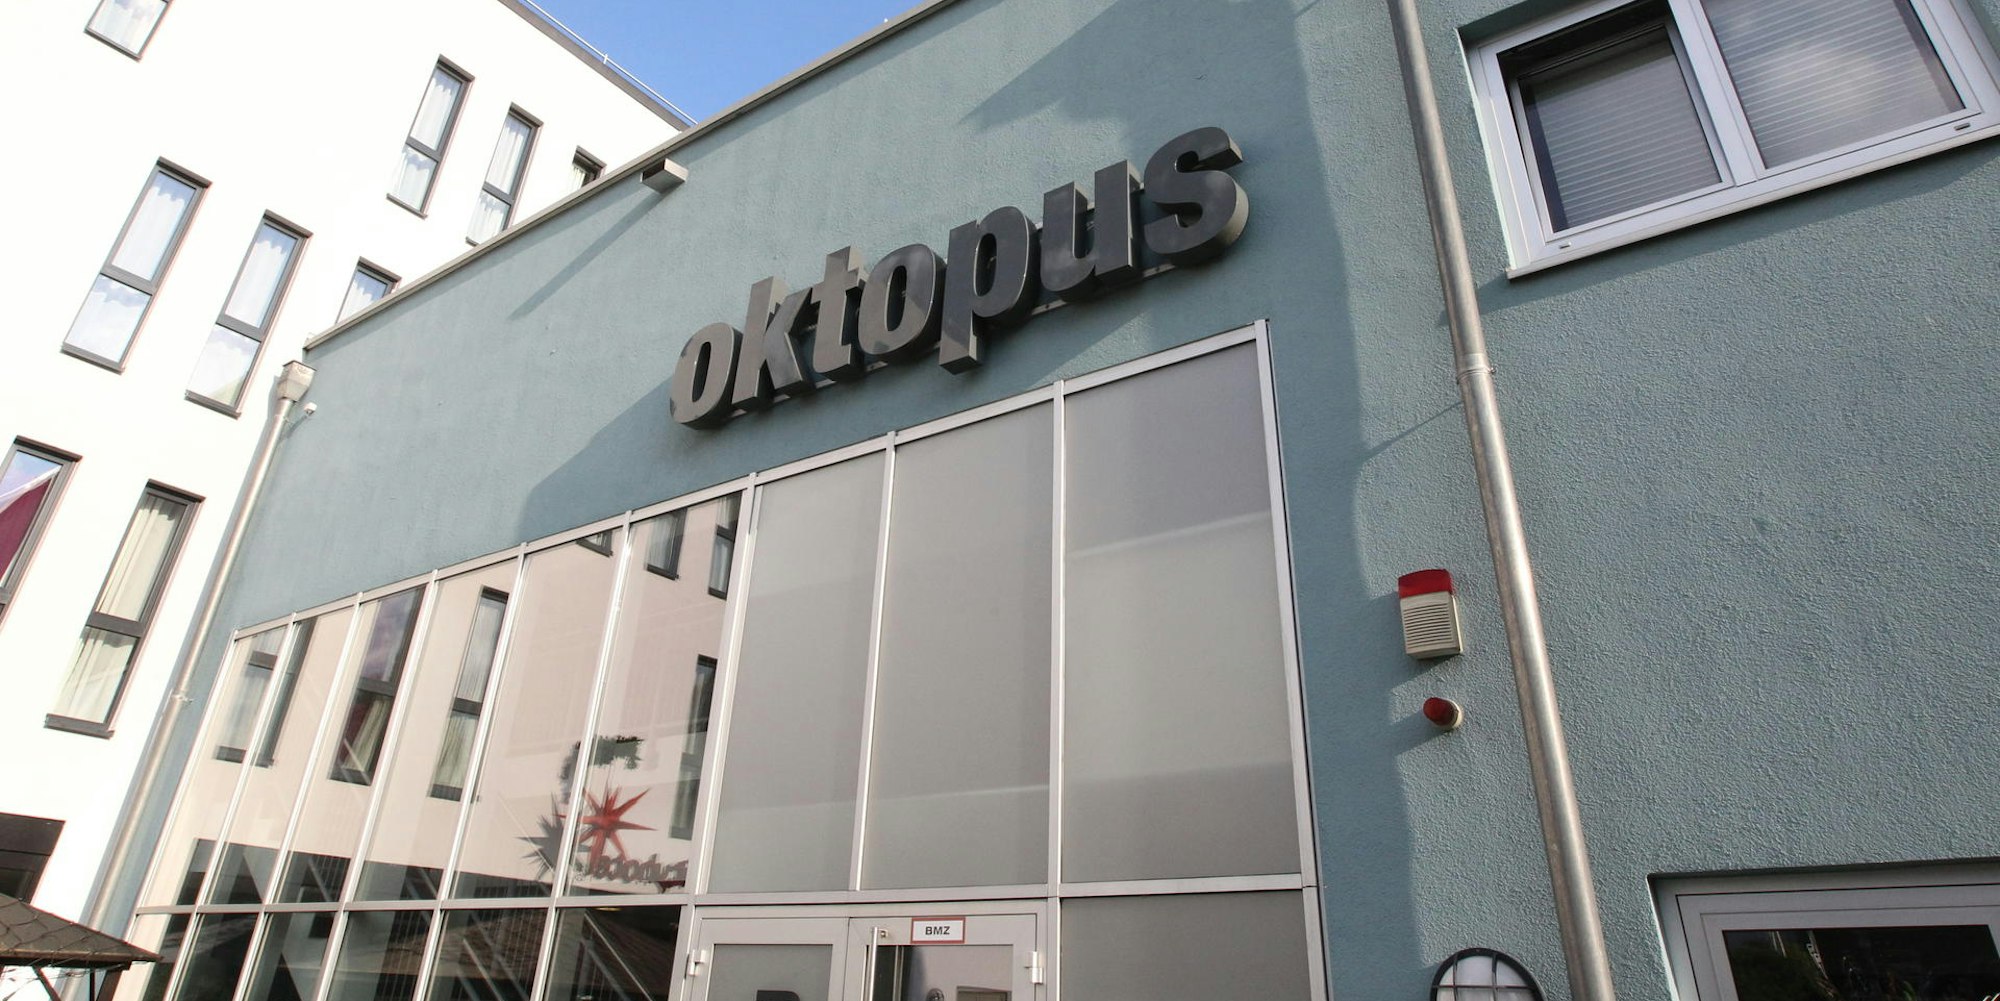 Oktopus_Symbol2